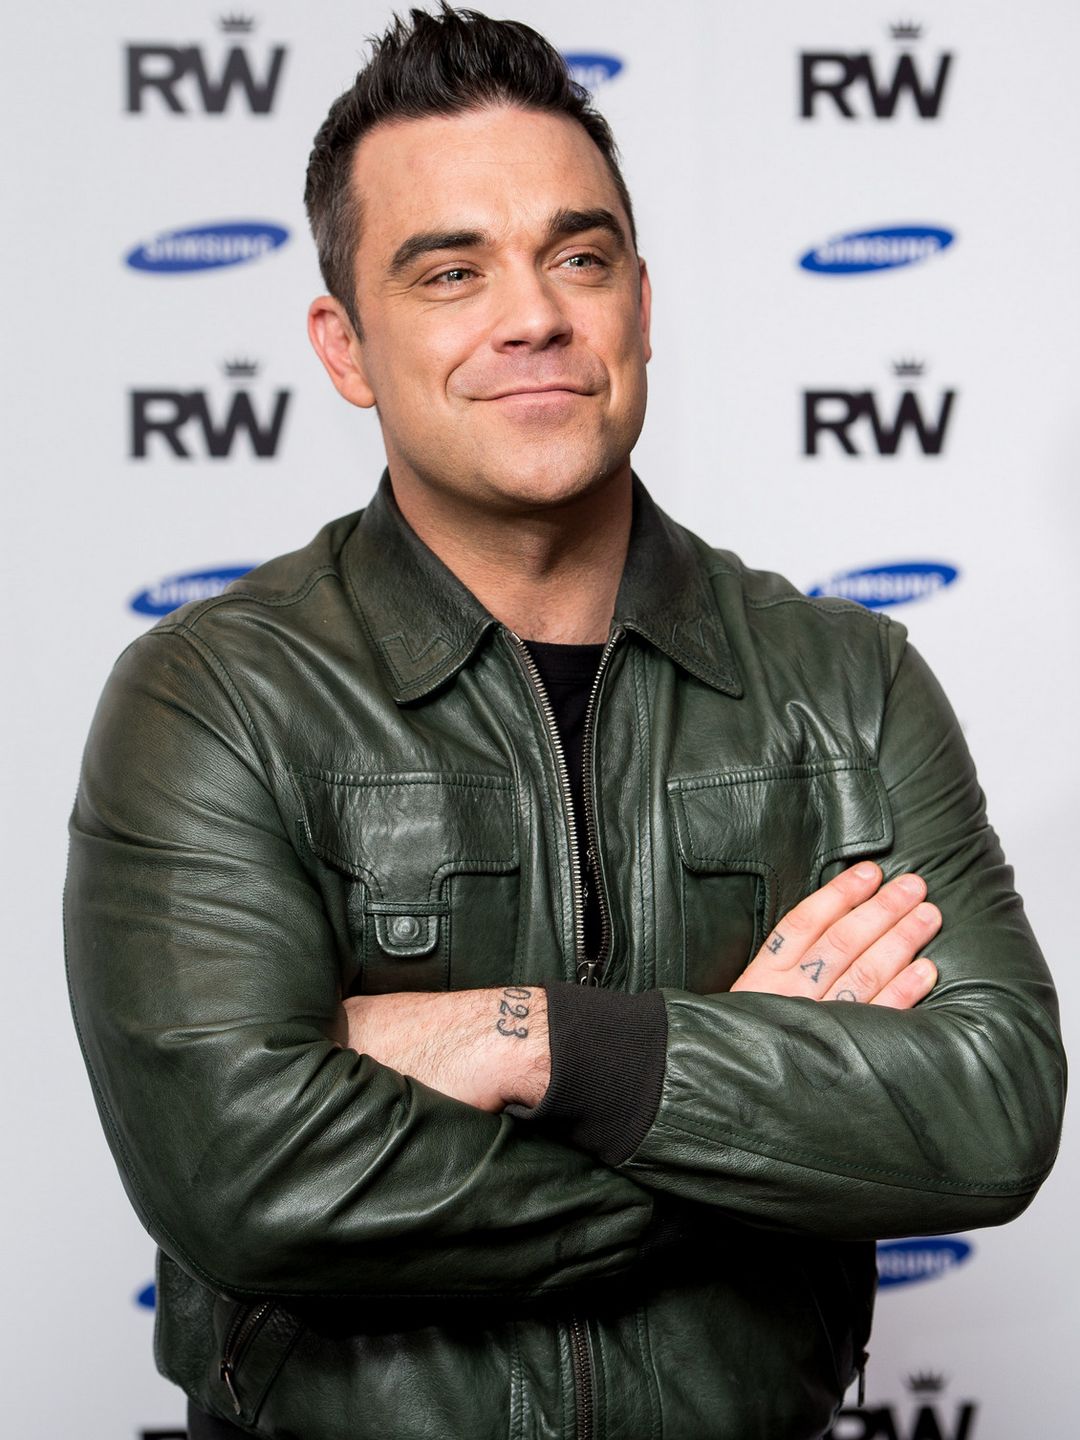 Robbie Williams date of birth